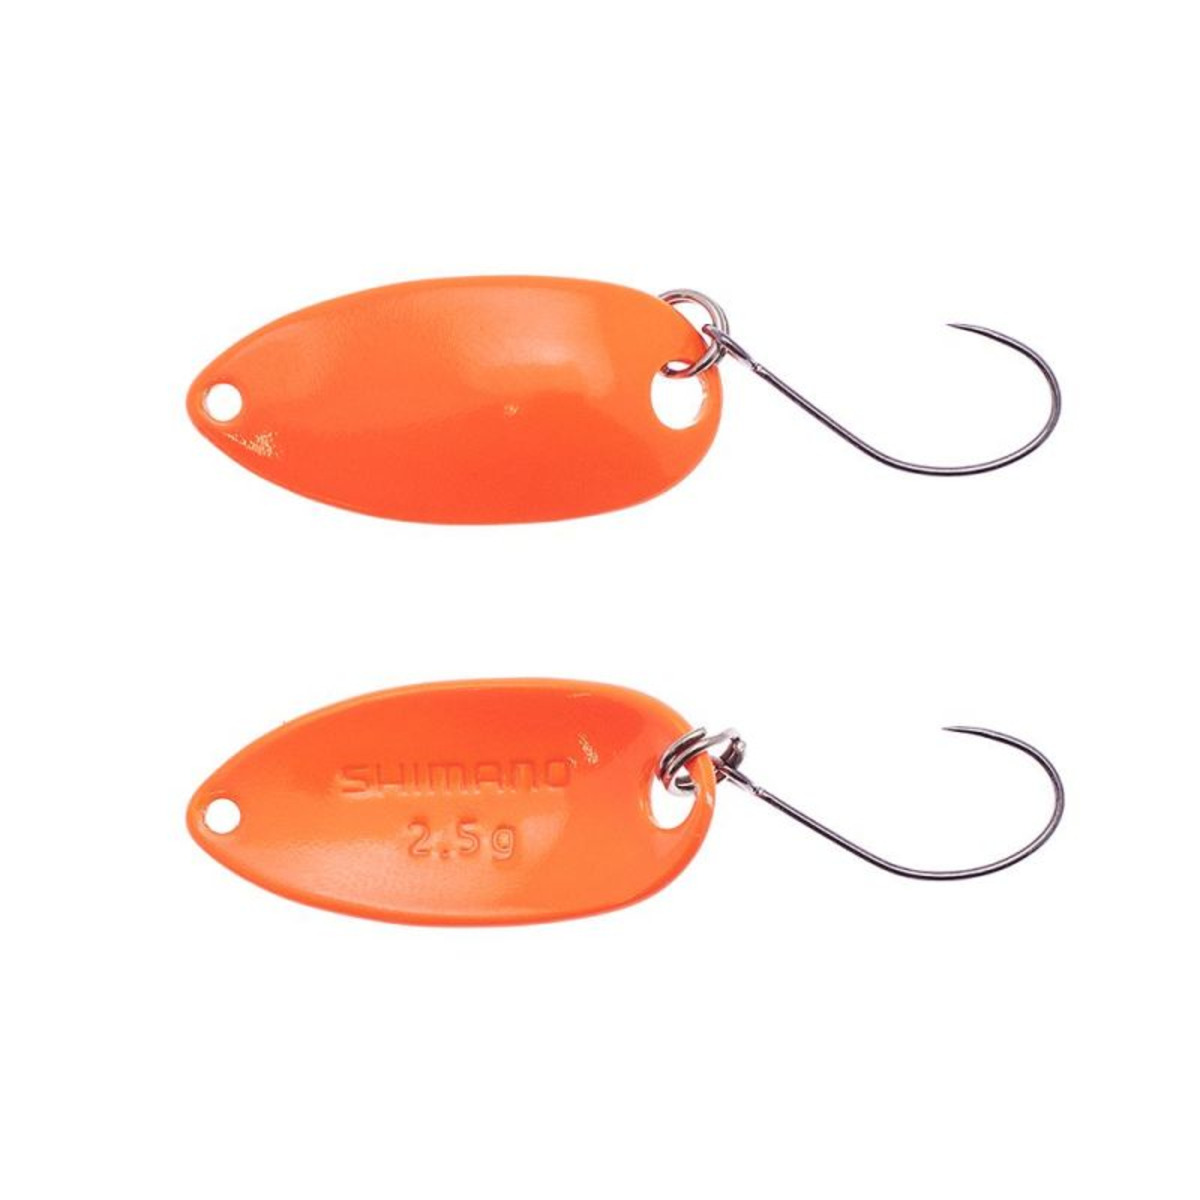 Shimano Cardiff Roll Swimmer - 2.5 g - Orange